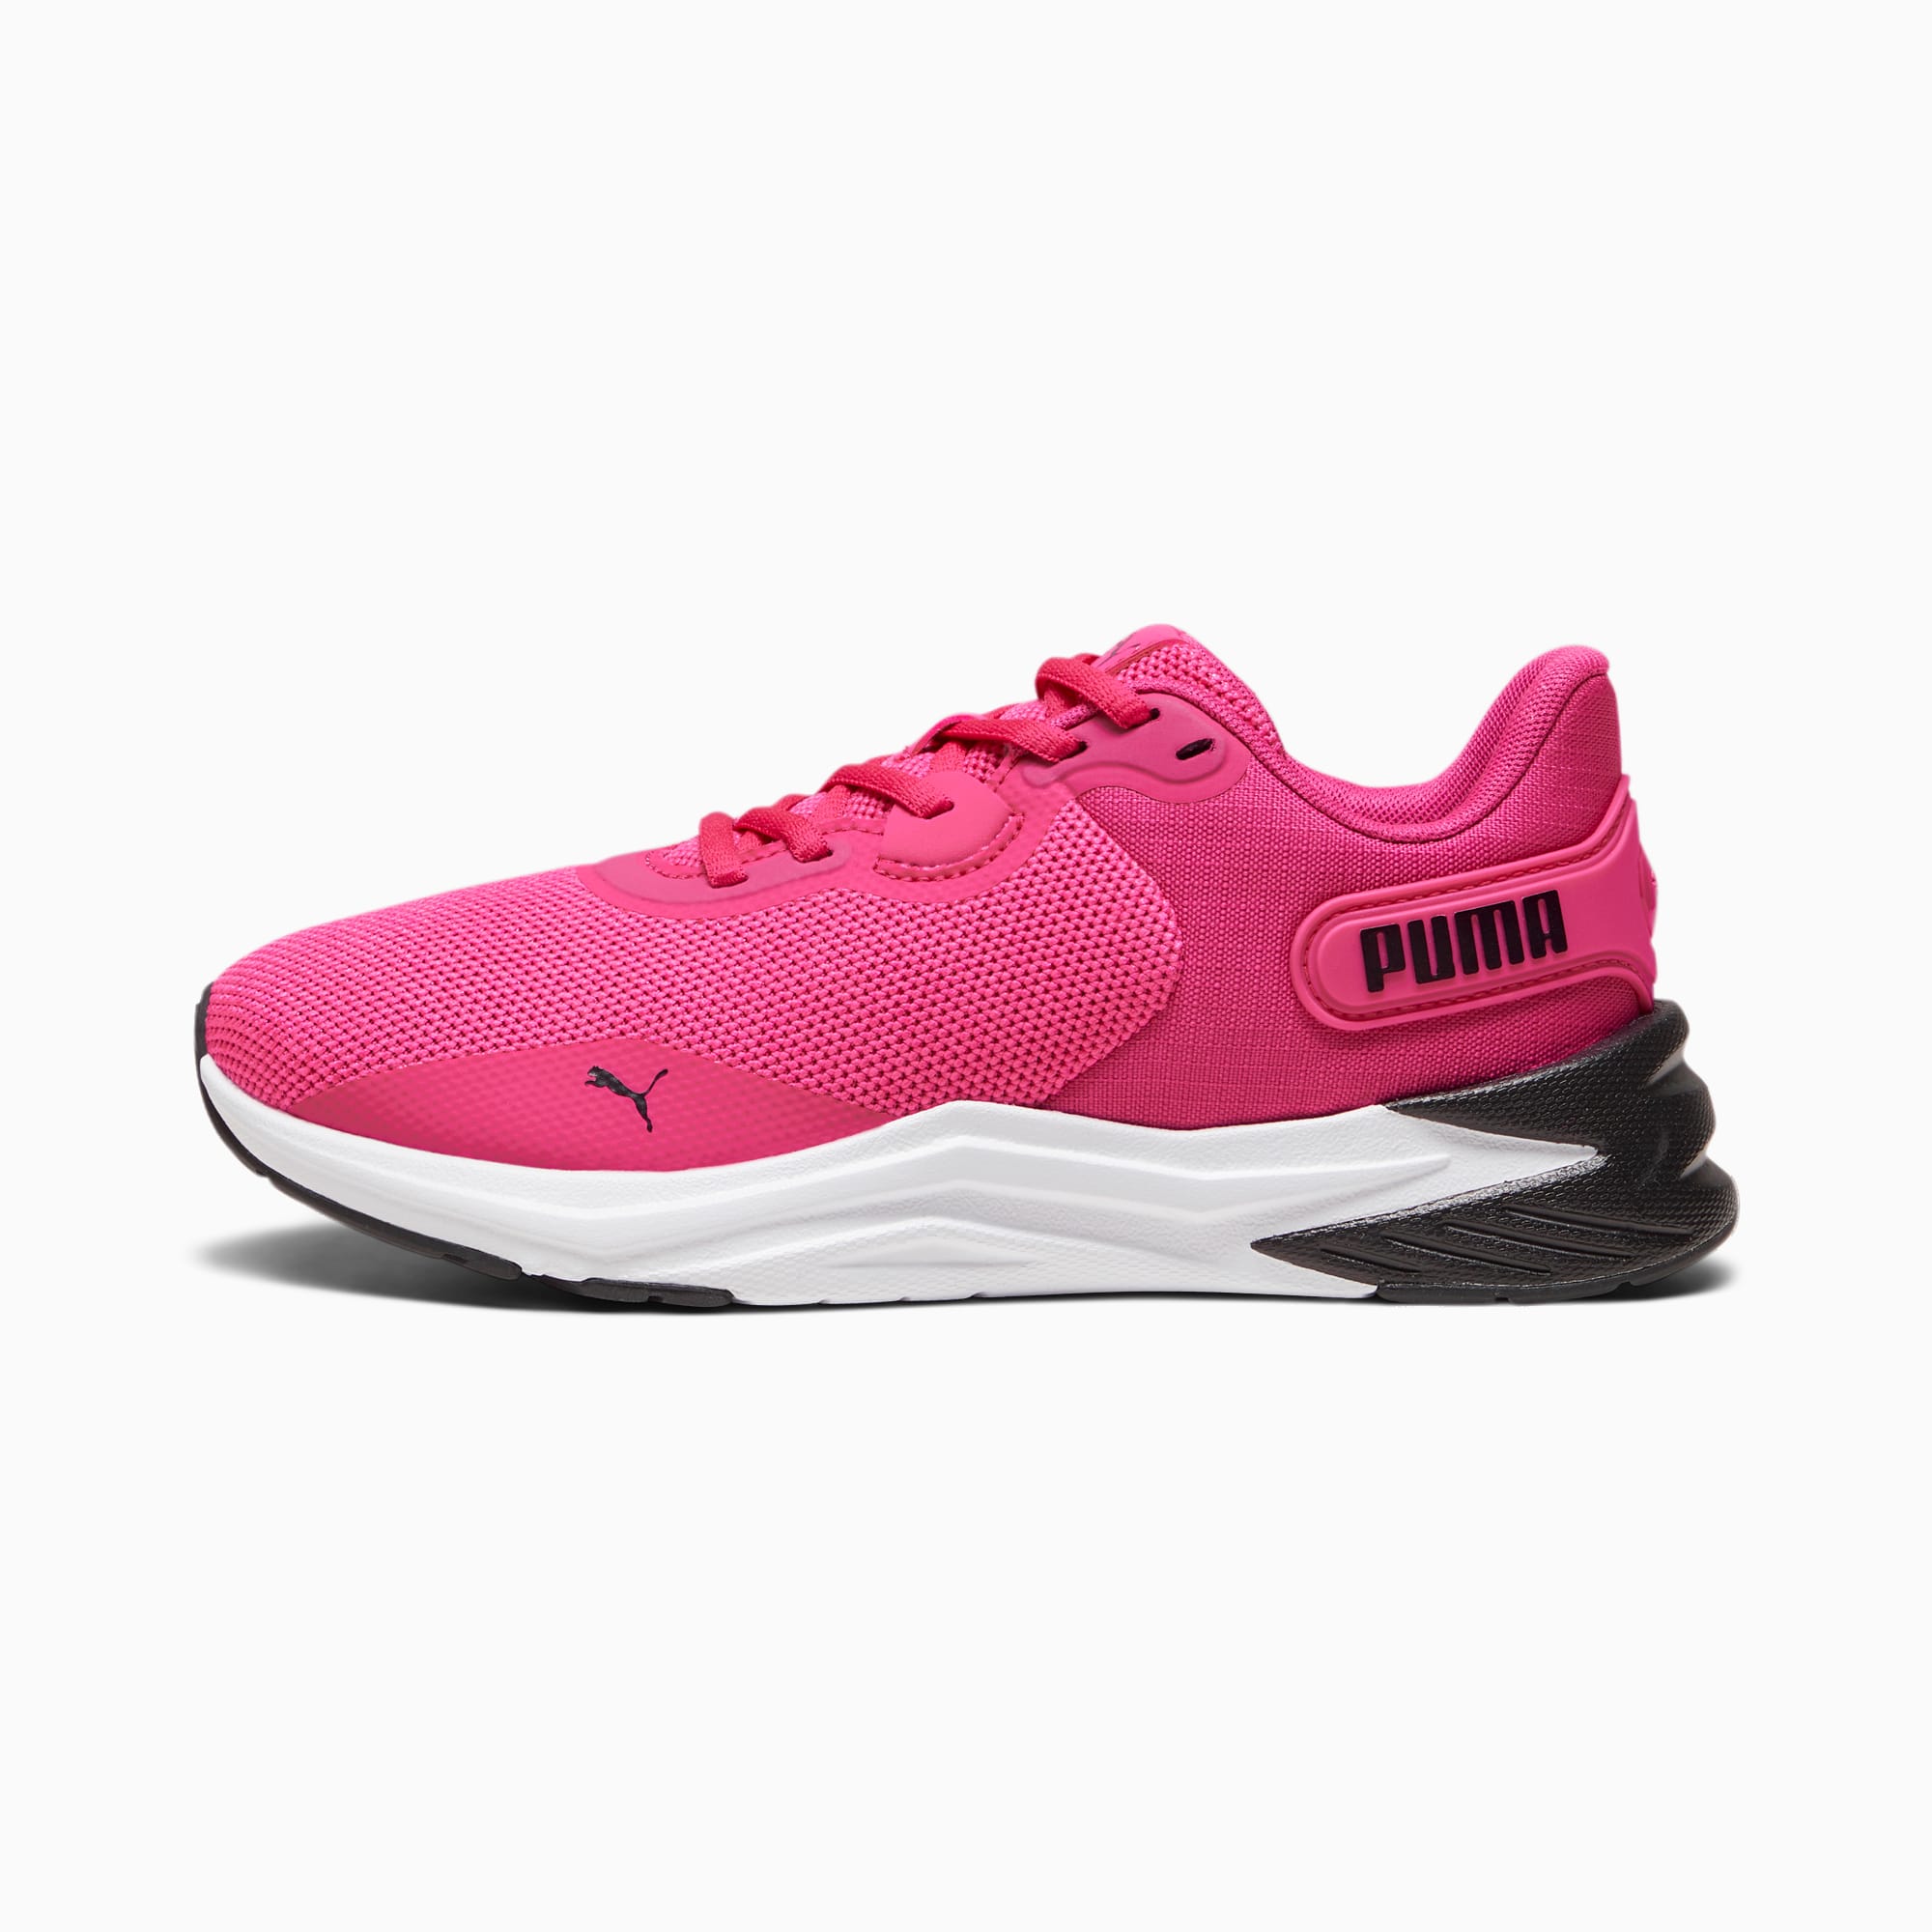 Women's PUMA Disperse XT 3 Training Shoes, Pink/White/Black